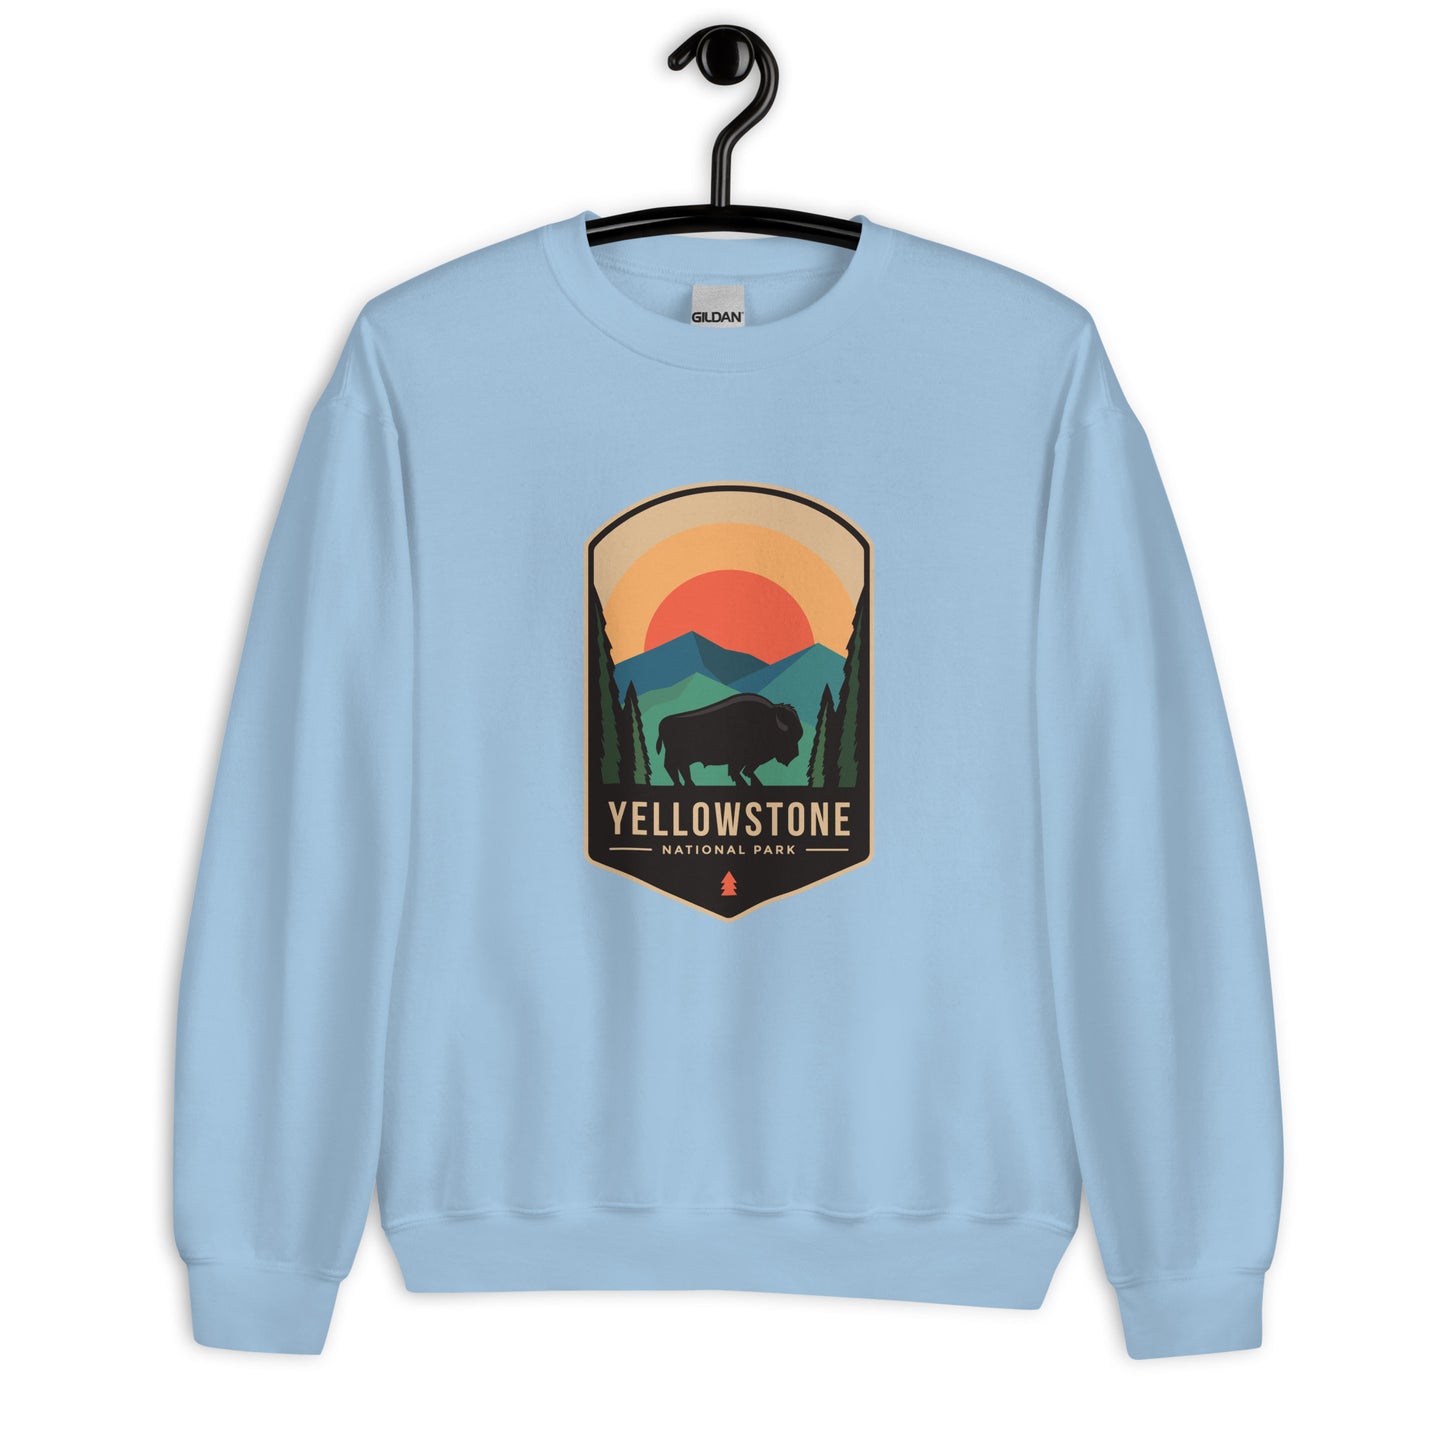 Yellowstone Bison Sweatshirt, Nature Park Vintage Graphic Crewneck Sweater Jumper Pullover Men Women Aesthetic Top Starcove Fashion